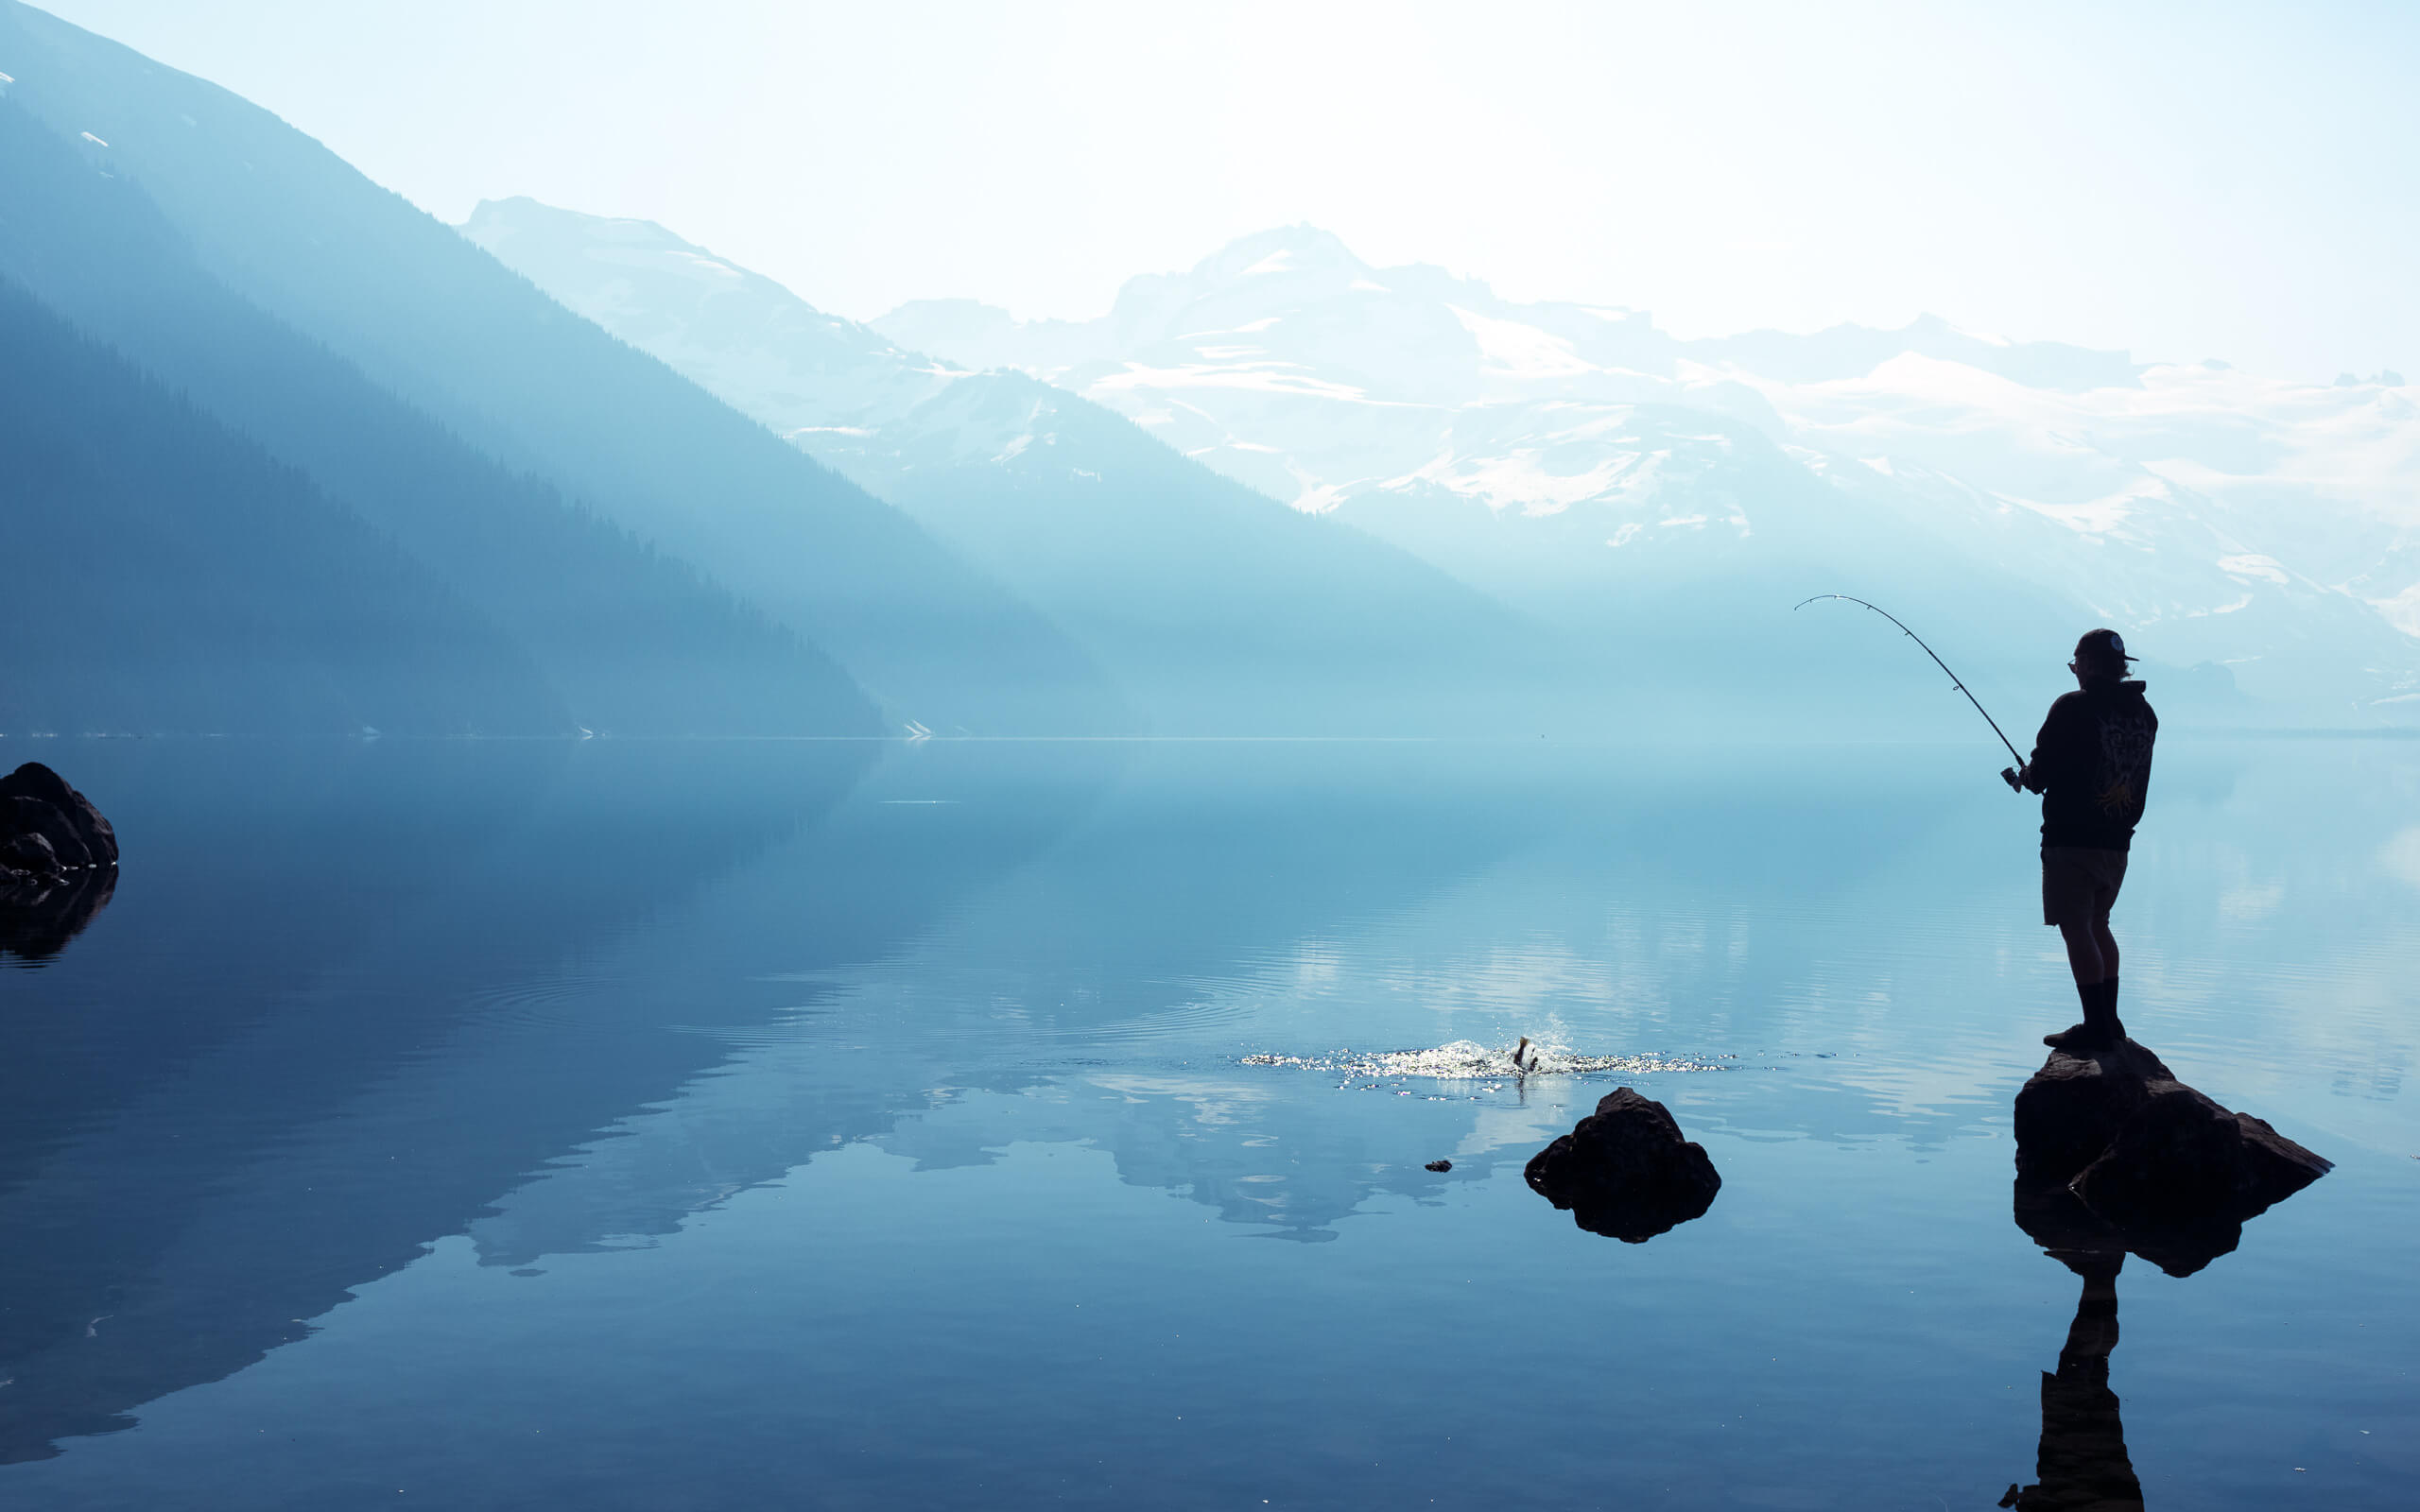 Stock Images Photos. Stock image for sale of a man fishing at Garibaldi Glacial Lake